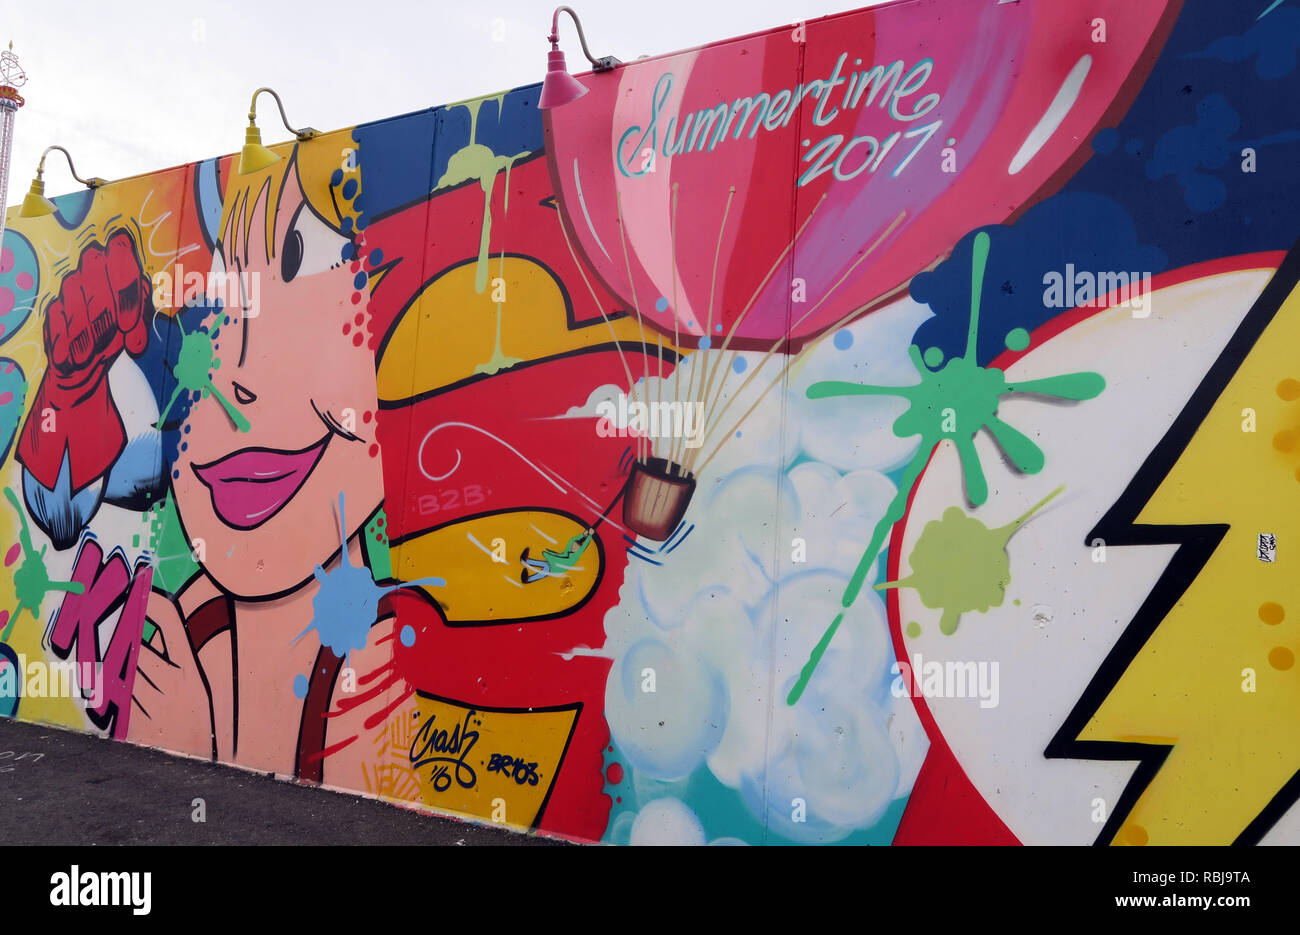 Coney Walls Art - Superwoman, Summertime 2017 - Coney Island Seaside - Brooklyn, New York, NY, USA Stock Photo